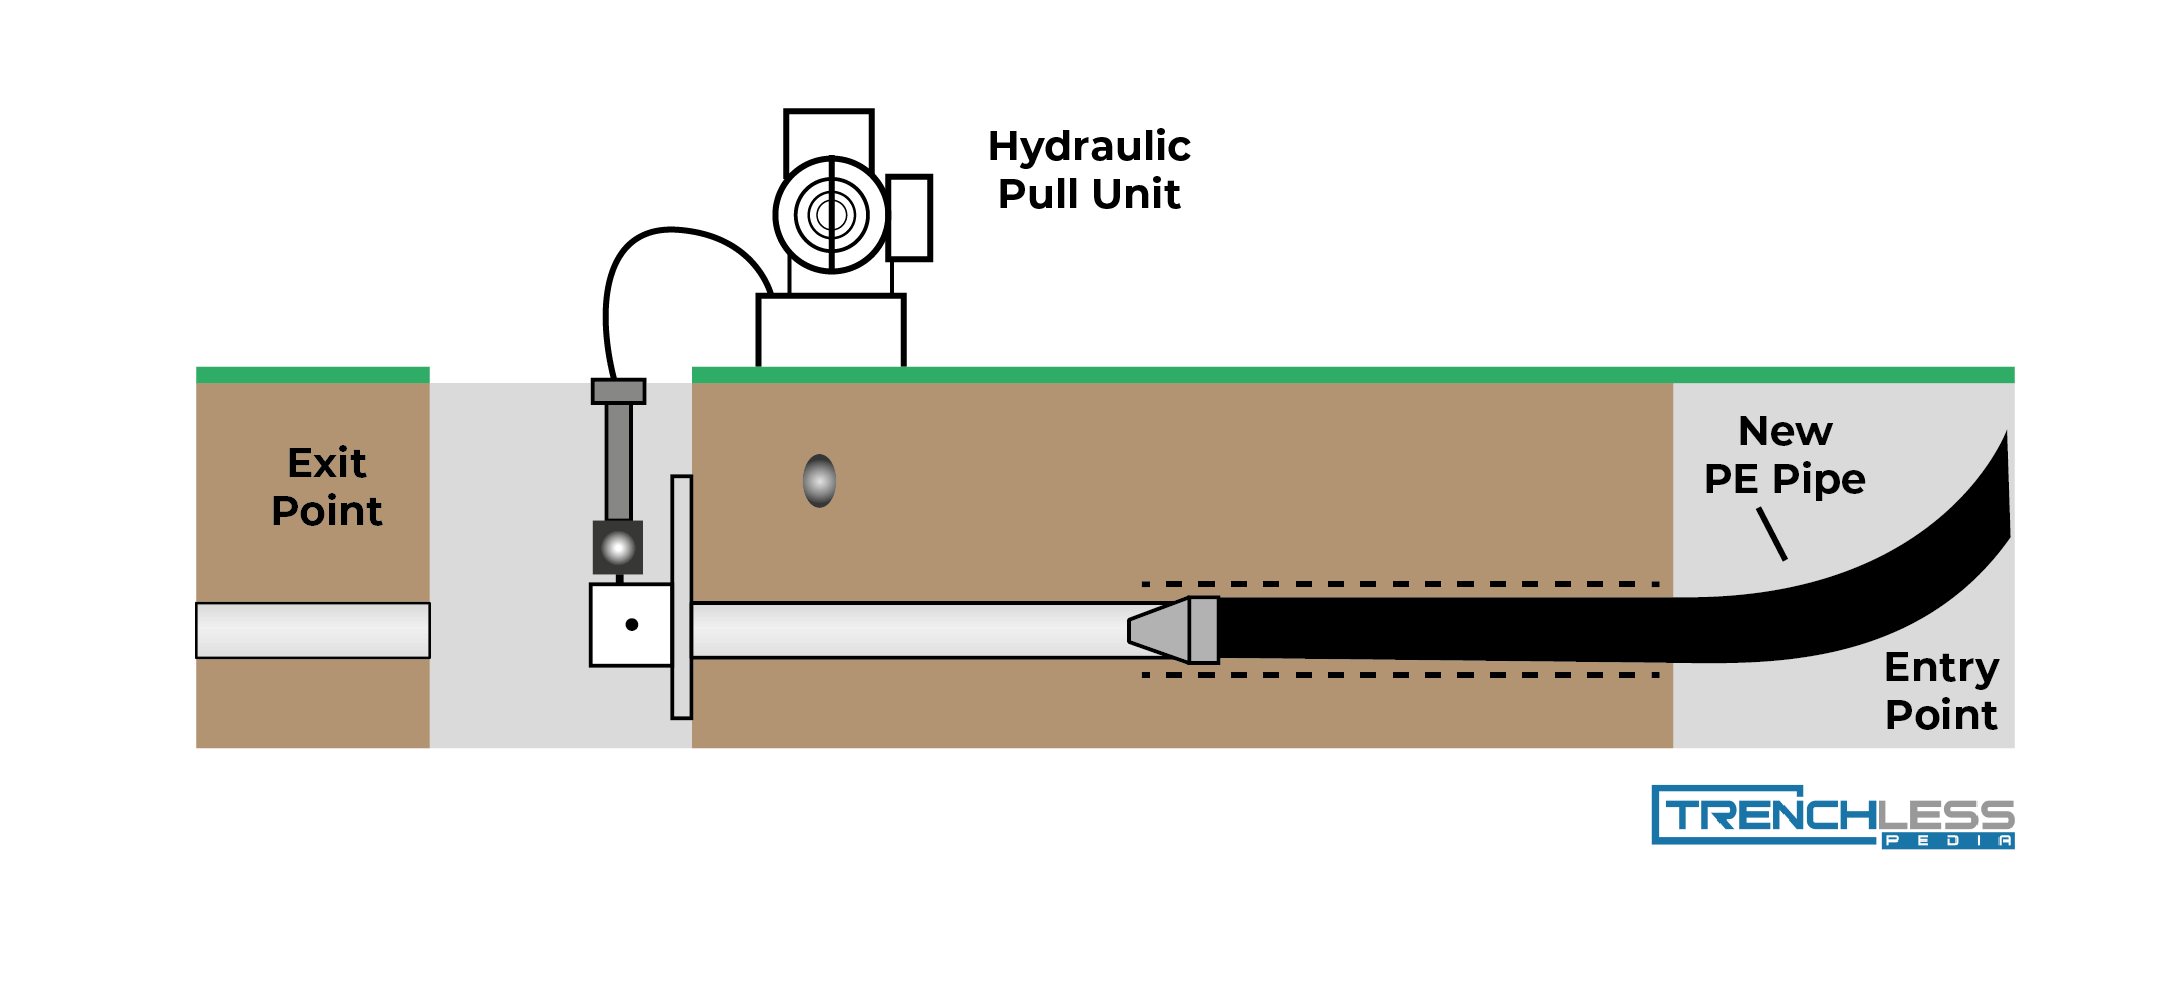 hydraulic pull unit for pipe bursting